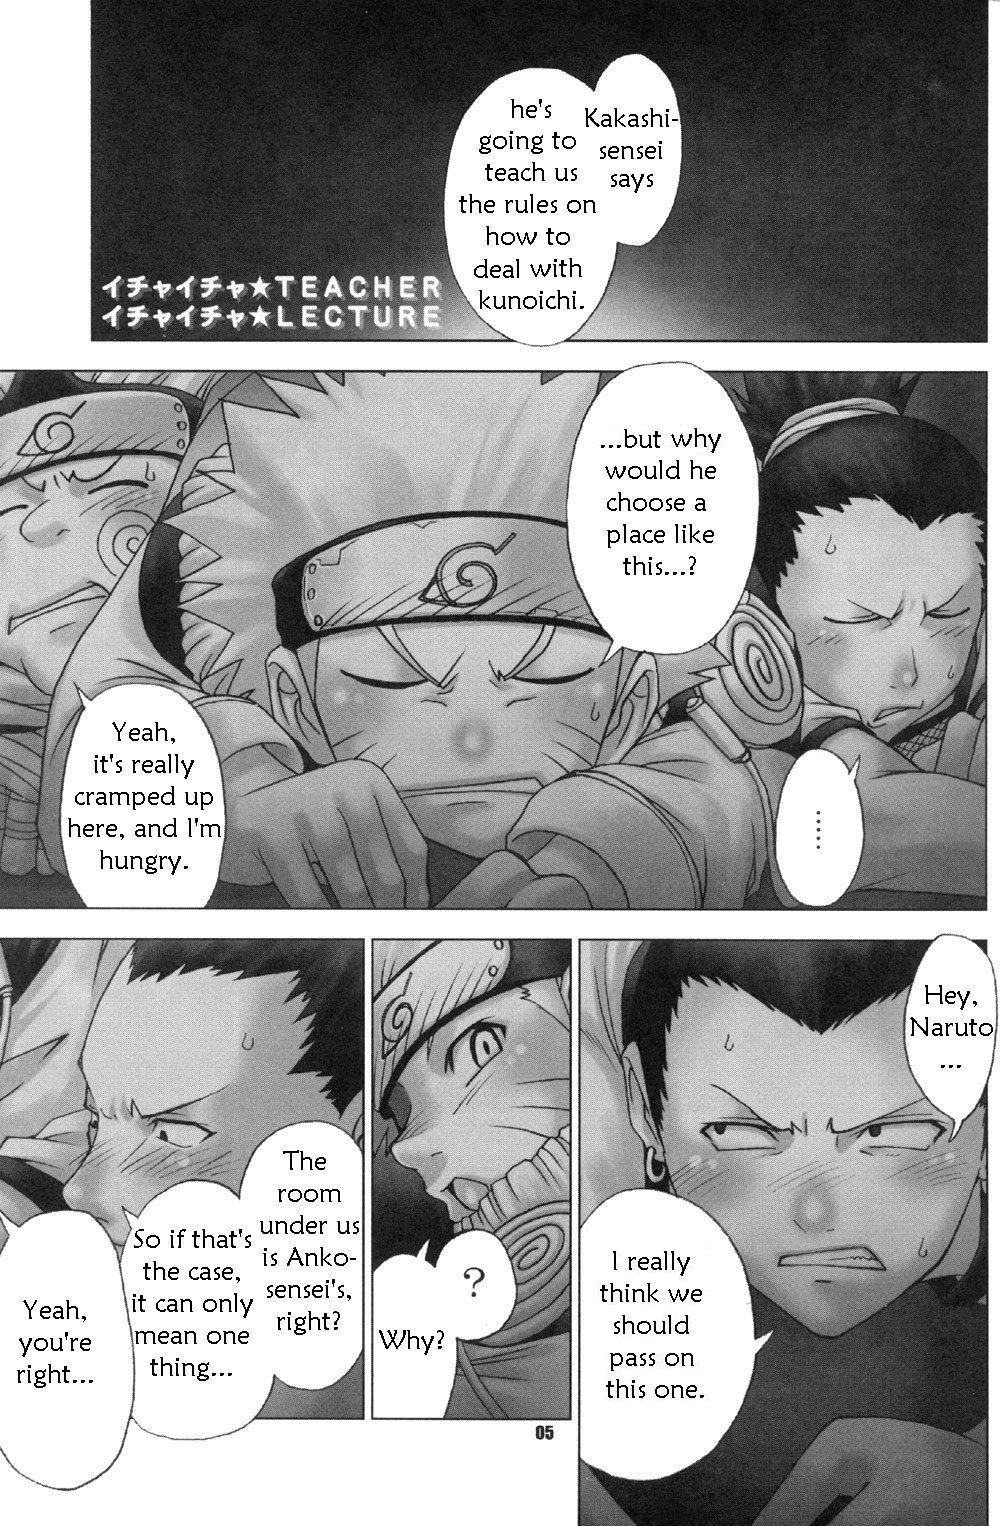 De Quatro STROBOLIGHTS - Naruto Pounded - Page 3